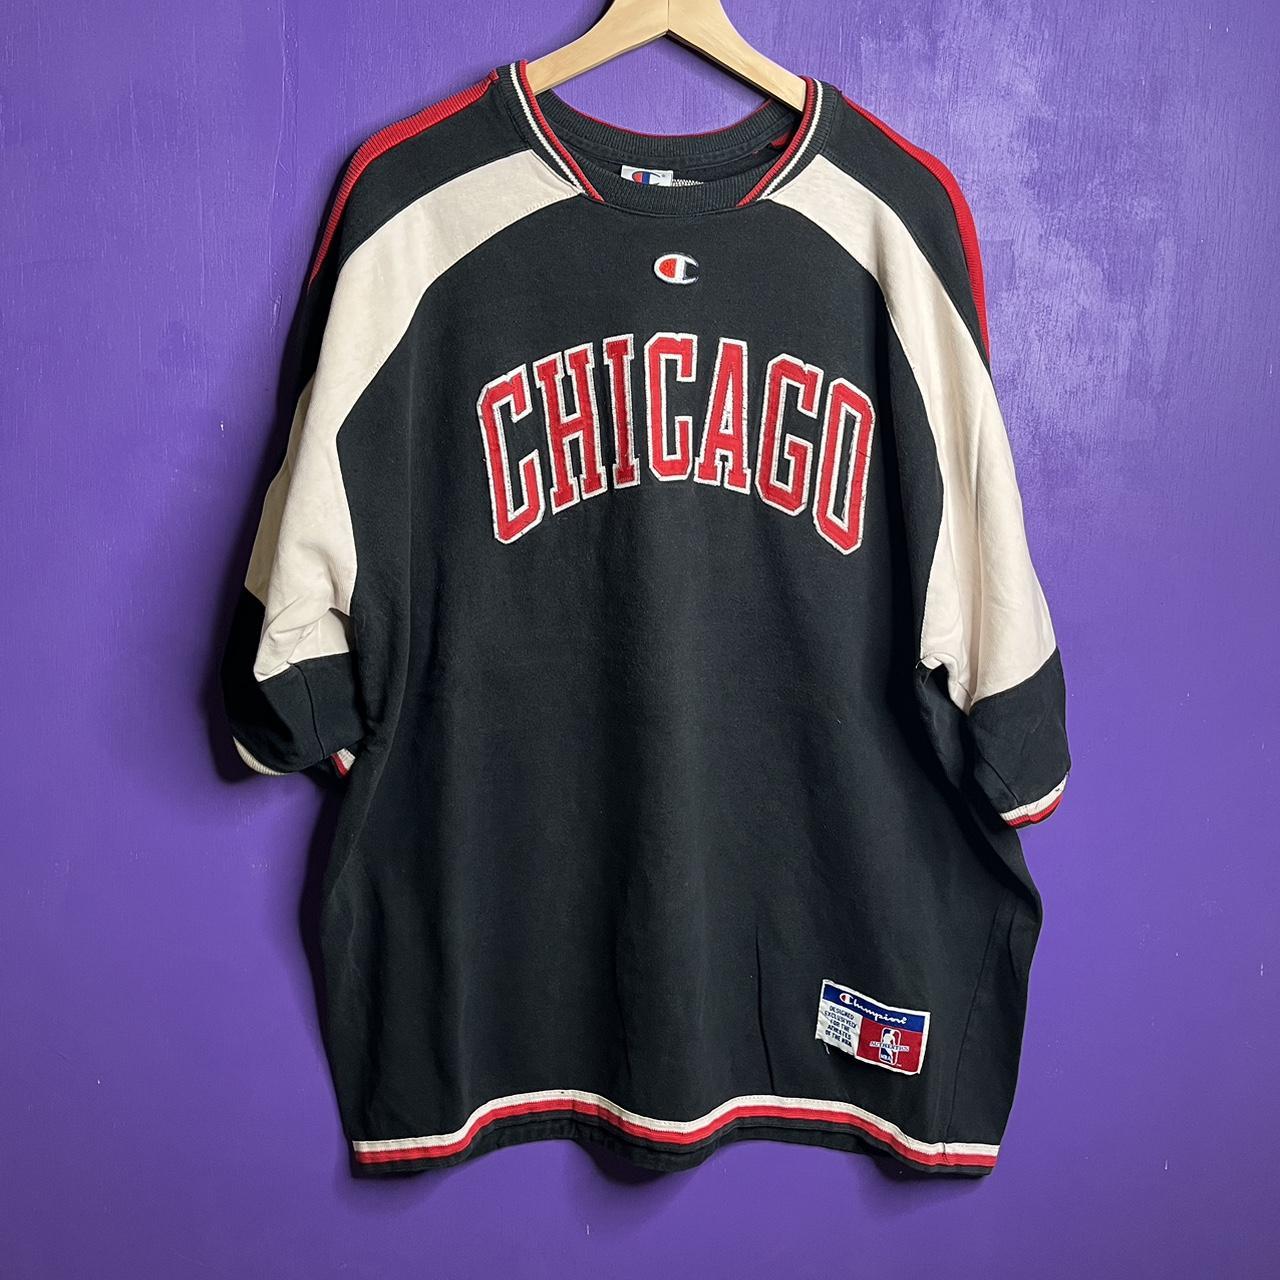 Vintage Chicago Bulls Champion Shooting Shirt Basketball Jersey, Size Large